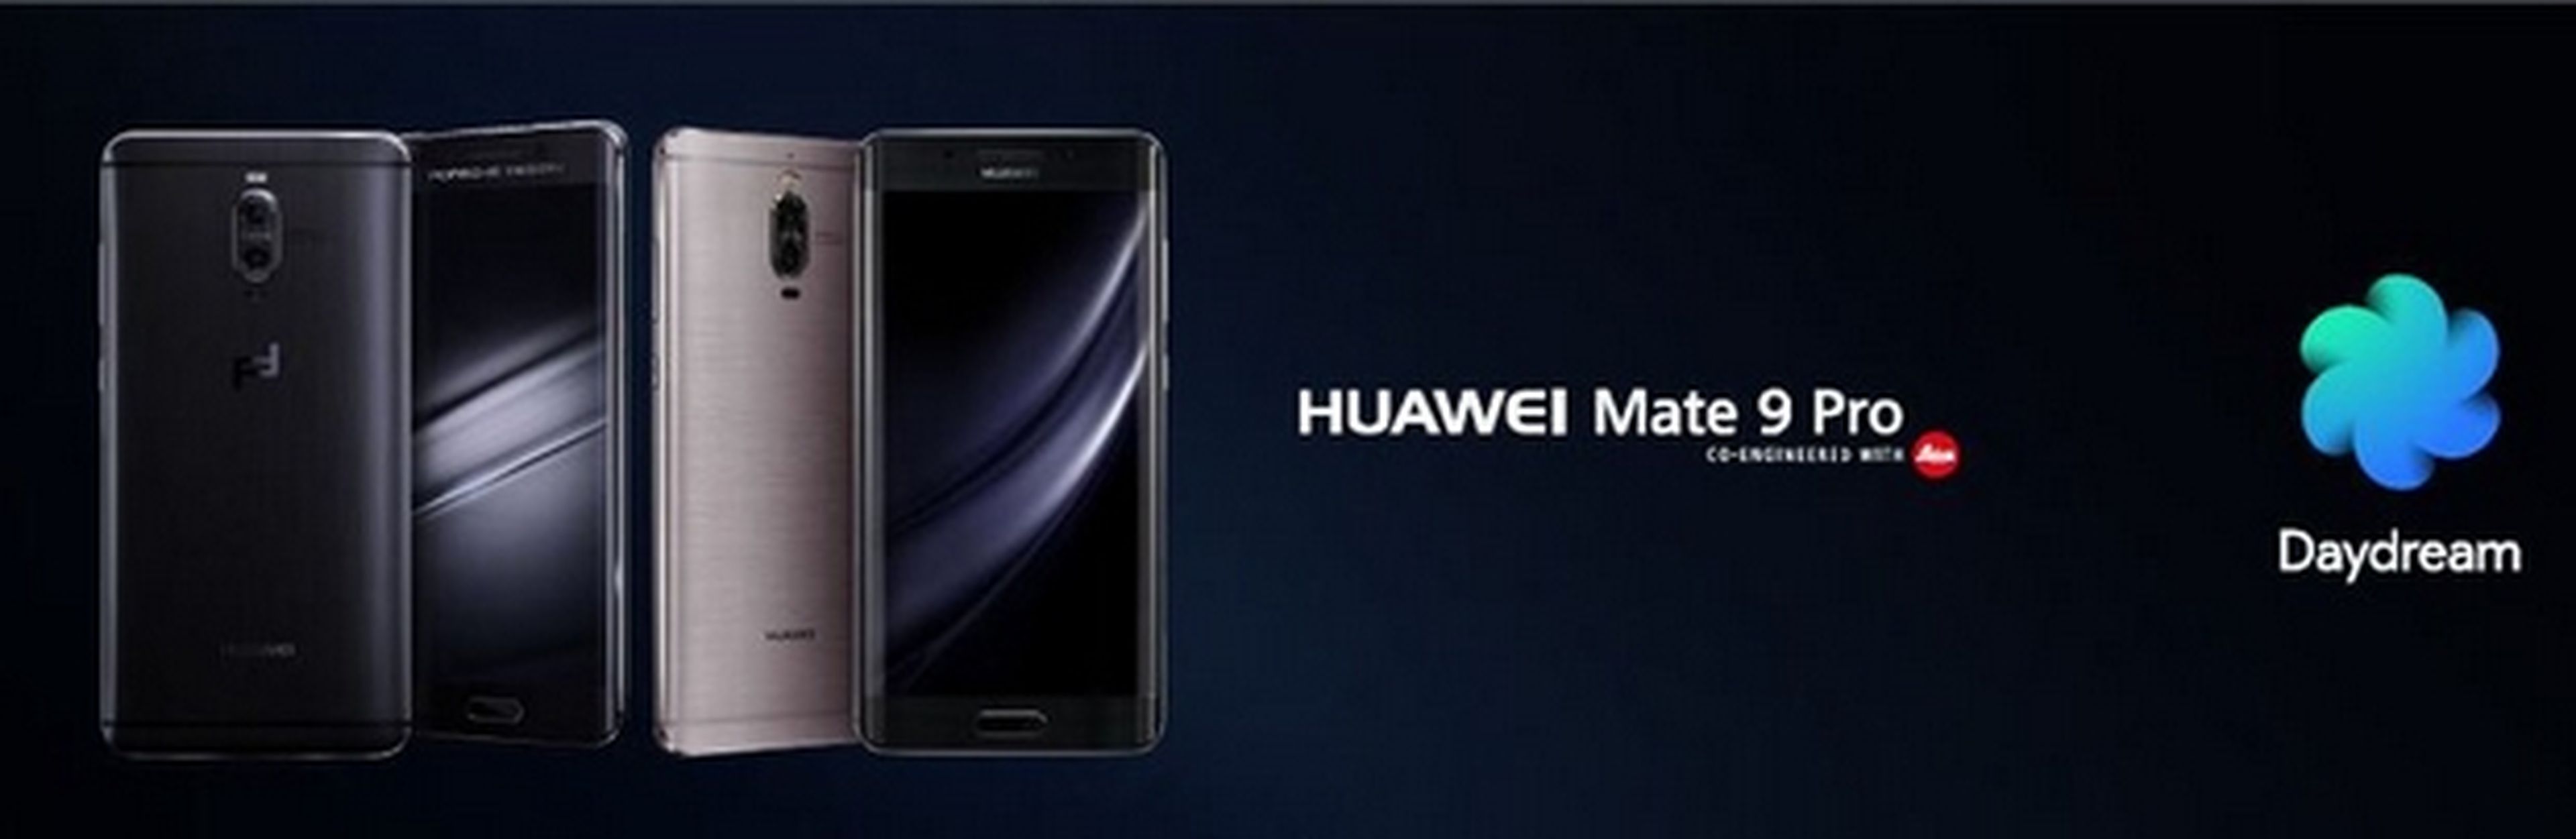 Huawei Mate 9 Pro, el primer smartphone con Alexa de Amazon, DayDream e Inteligencia Artificial